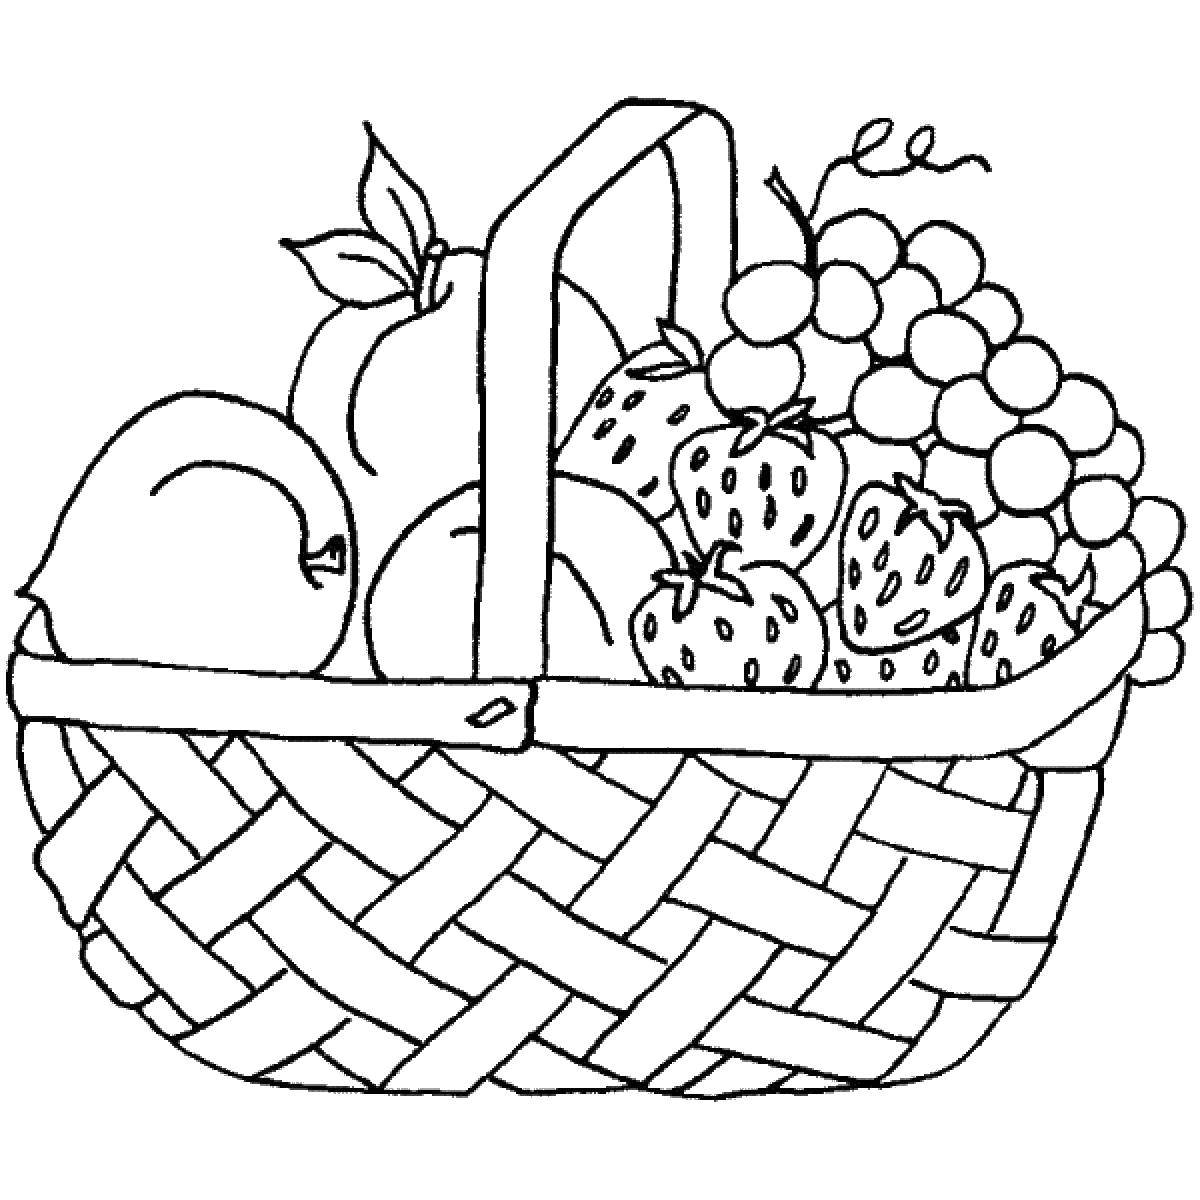 Coloring A basket of fruit.. Category fruits. Tags:  food, fruit, basket.